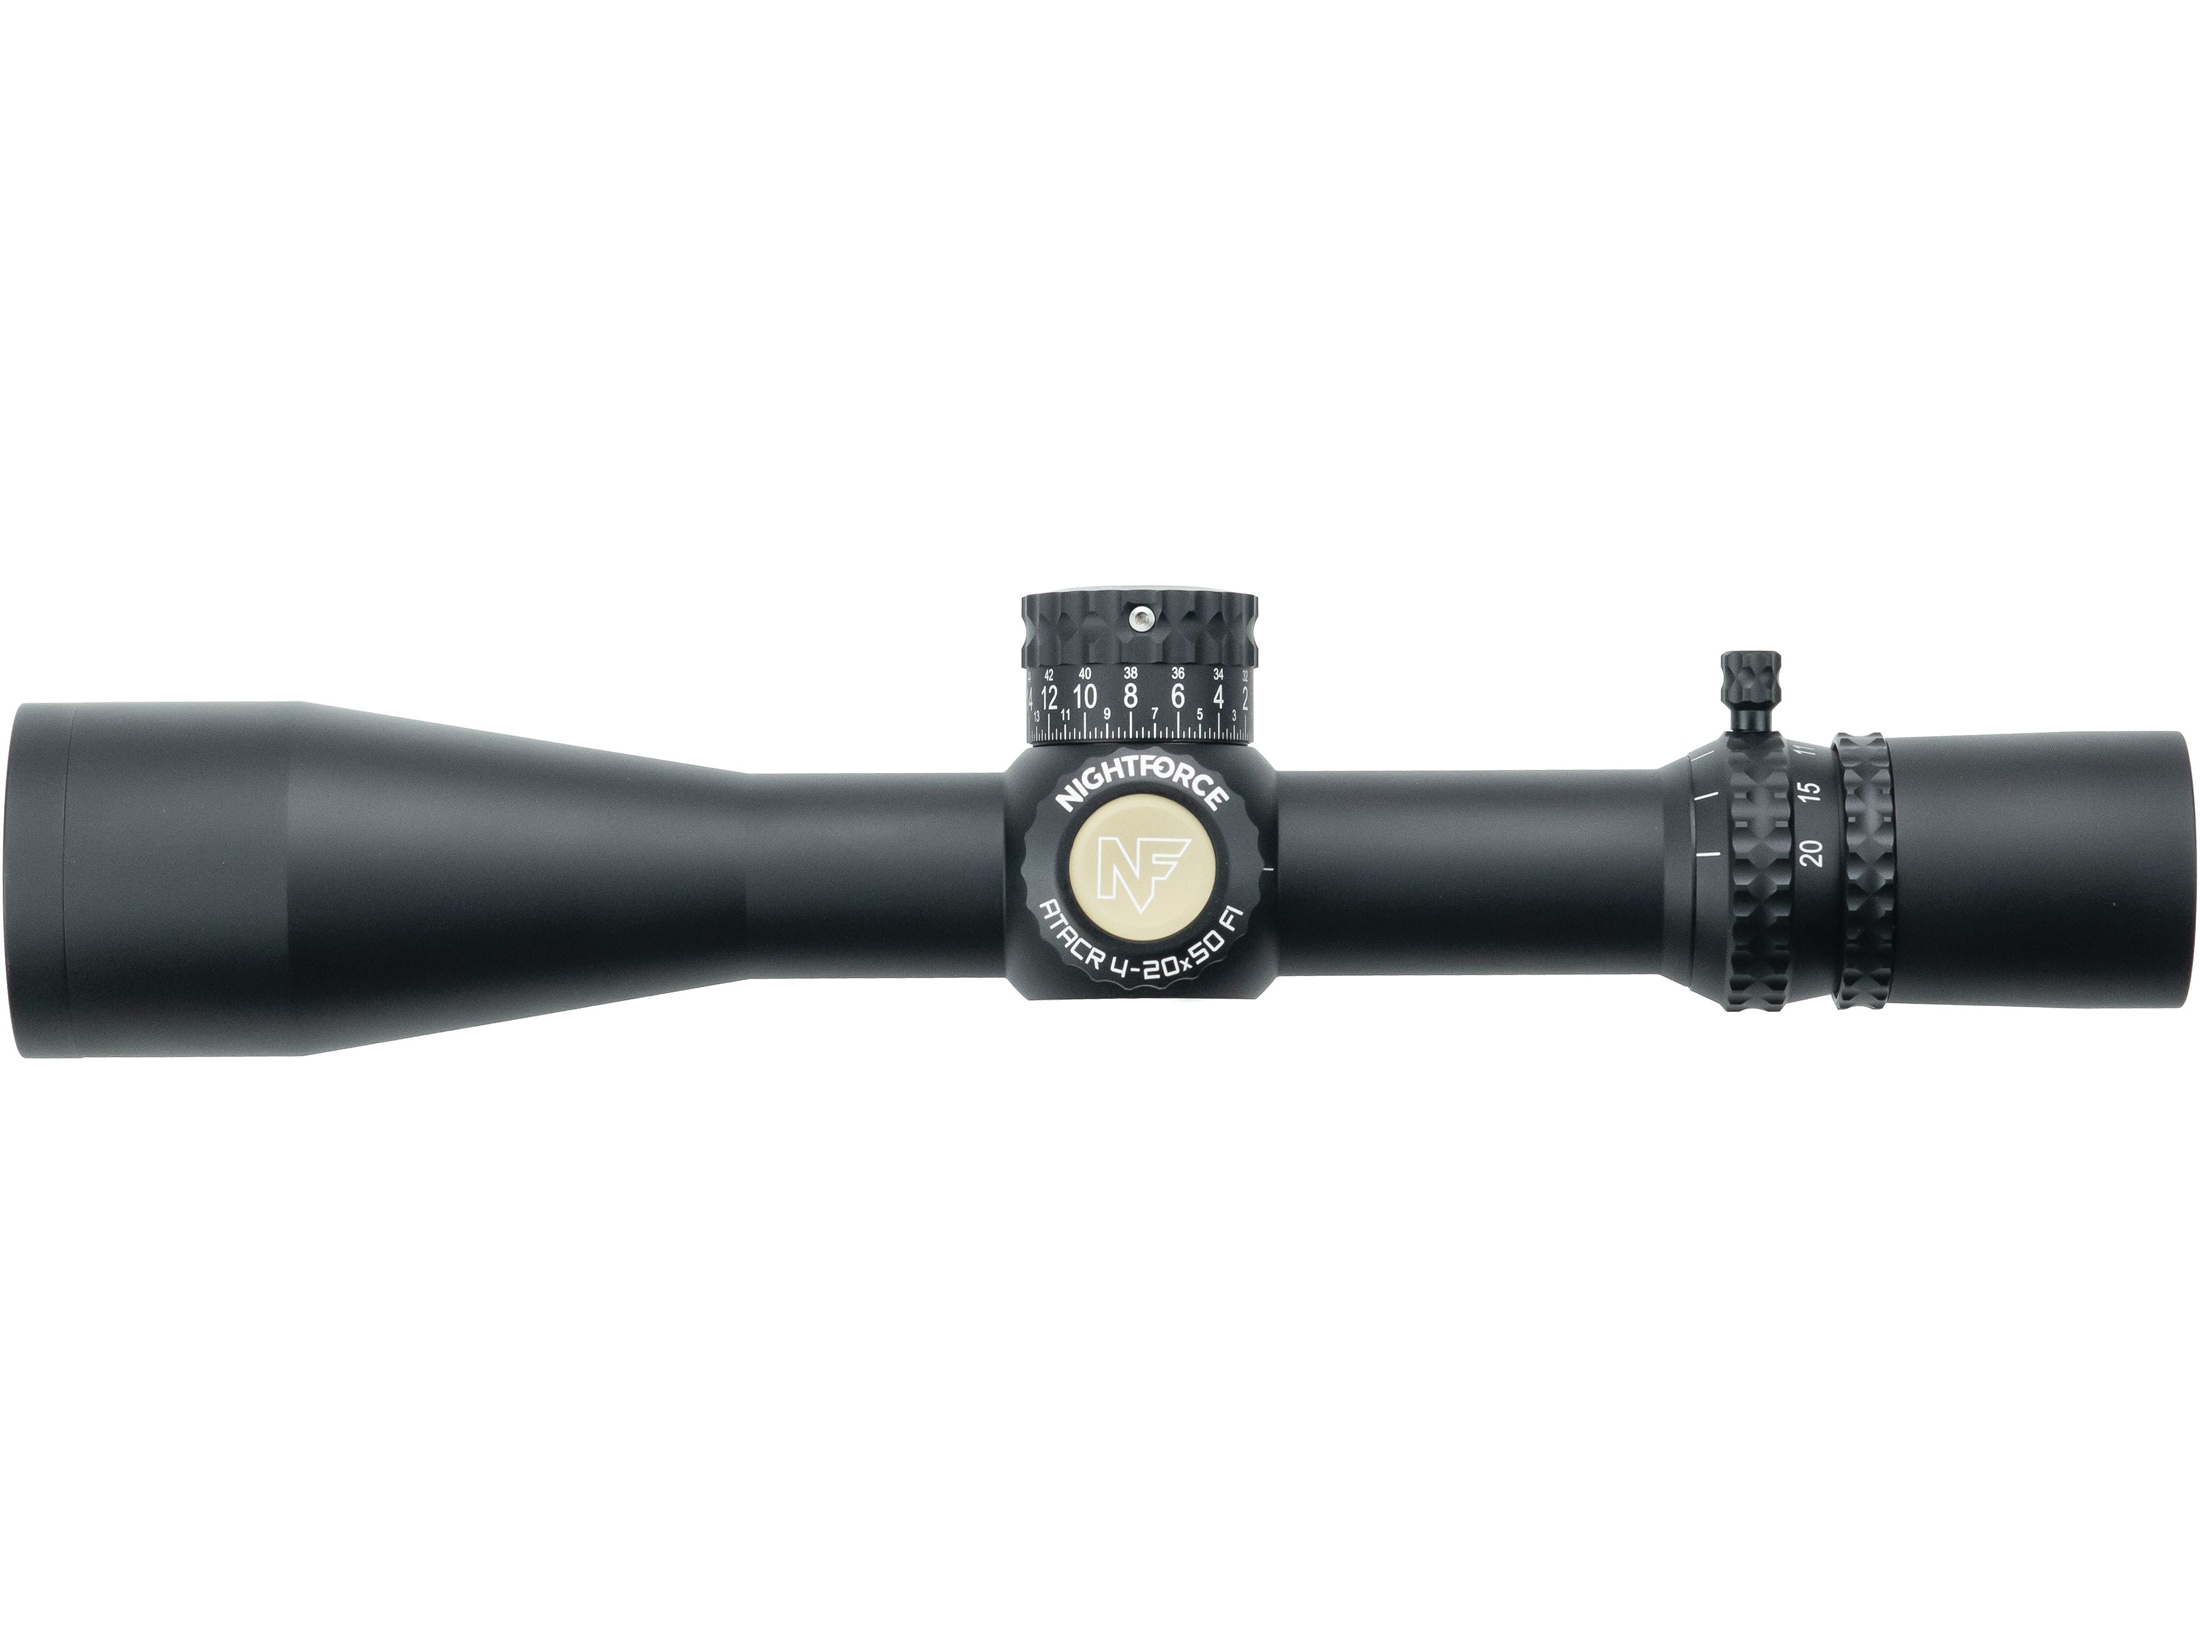 Nightforce ATACR F1 Rifle Scope 34mm Tube 4-20x 50mm Illuminated Mil-XT Reticle Matte Black